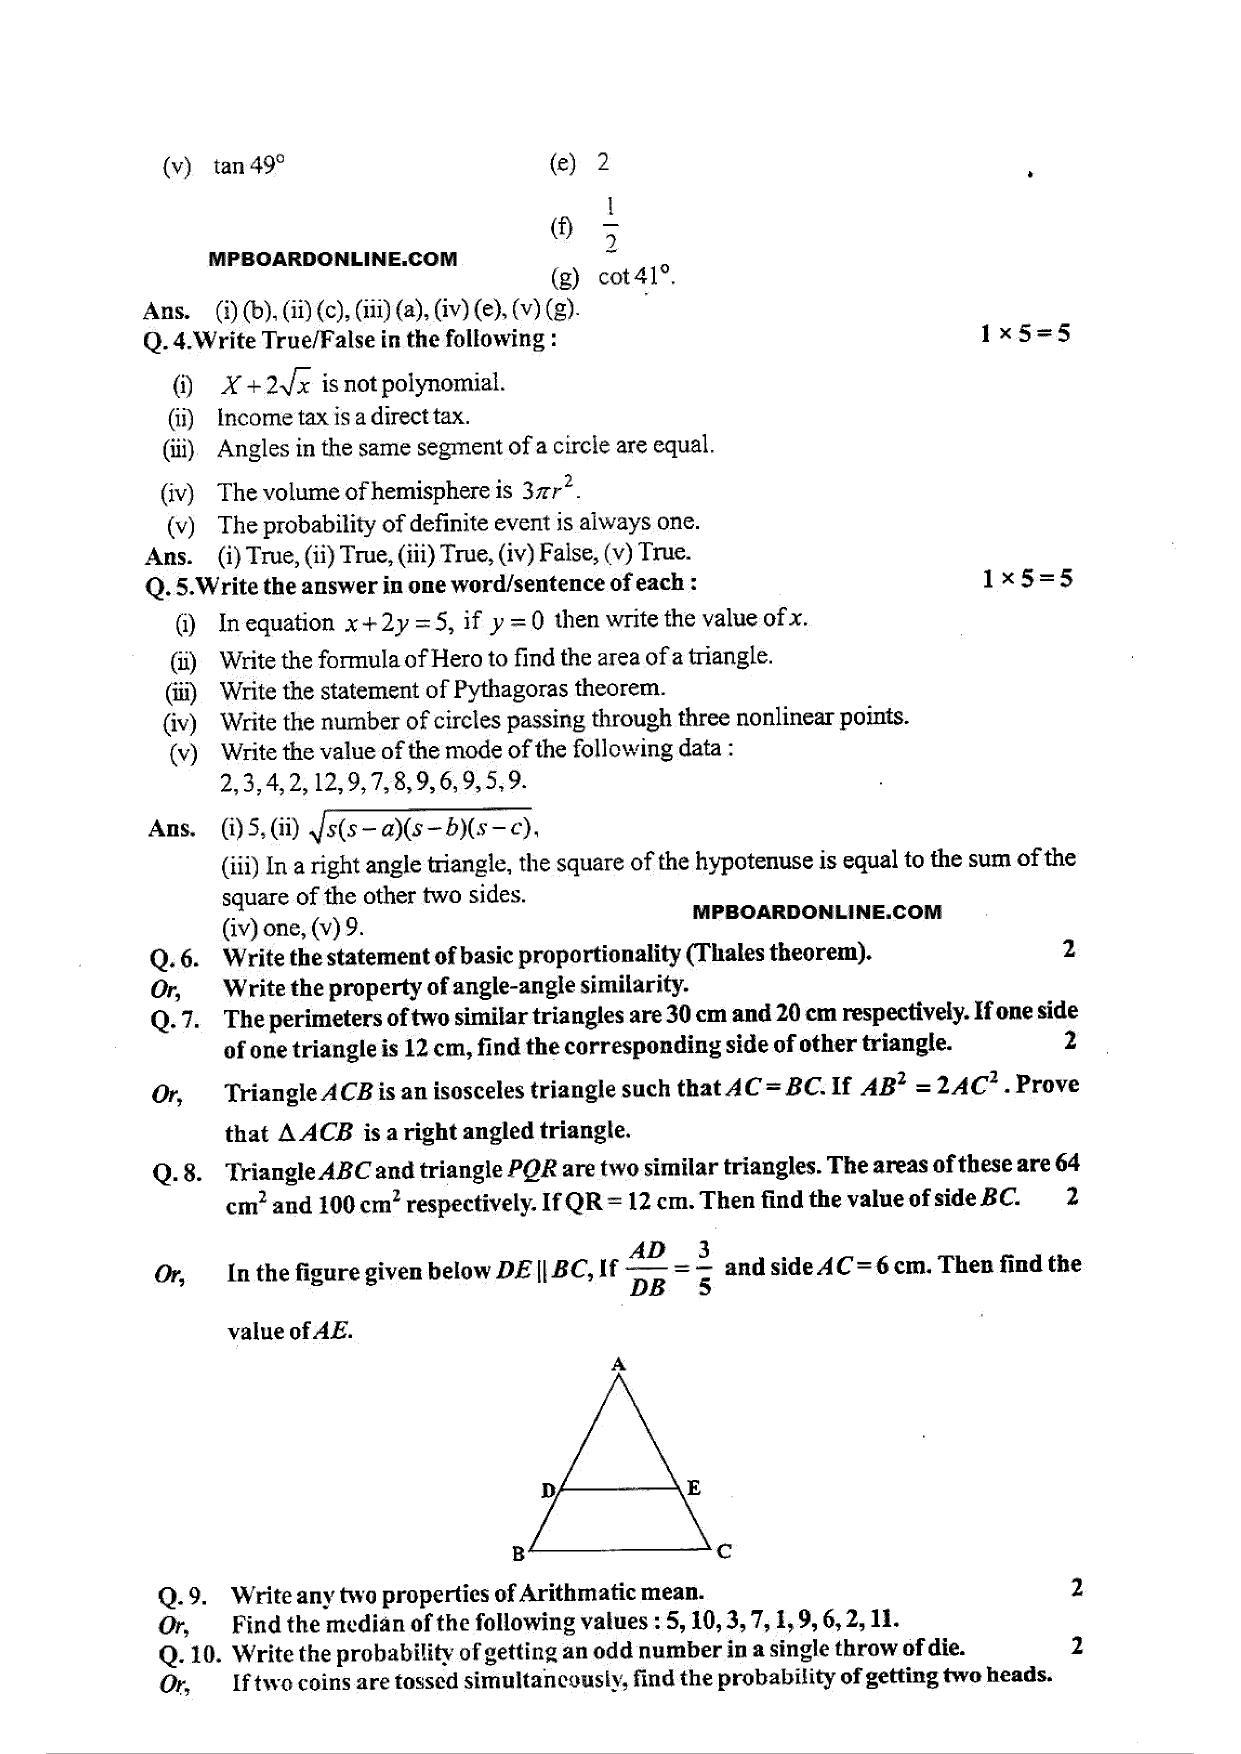 MP Board Class 10 Mathematica 2016 Question Paper - Page 2